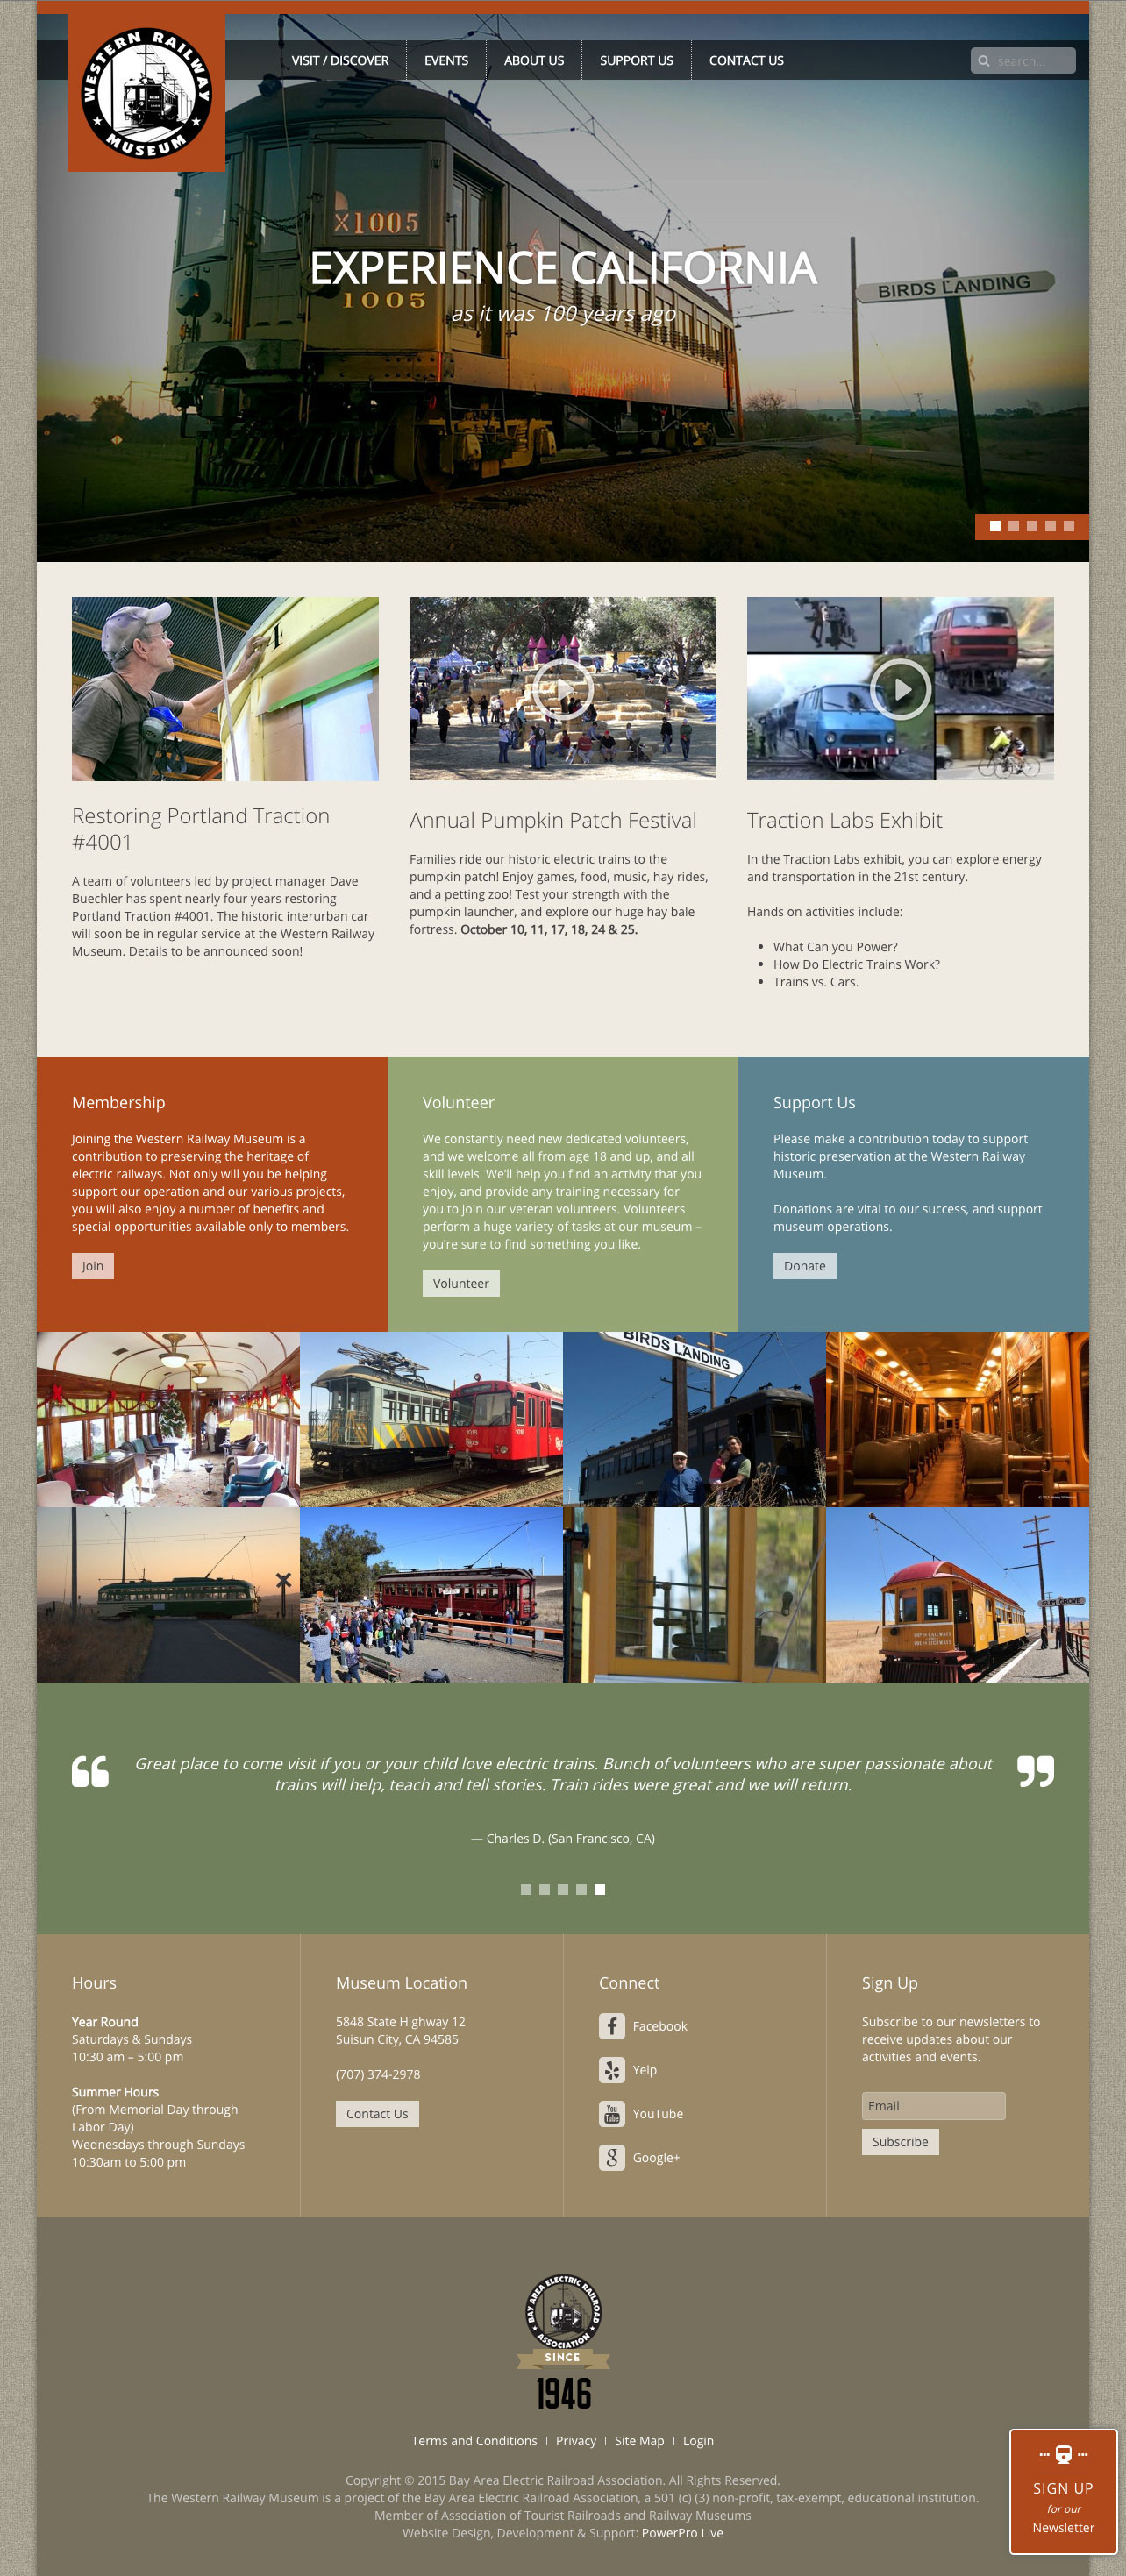 western-railway-museum-website